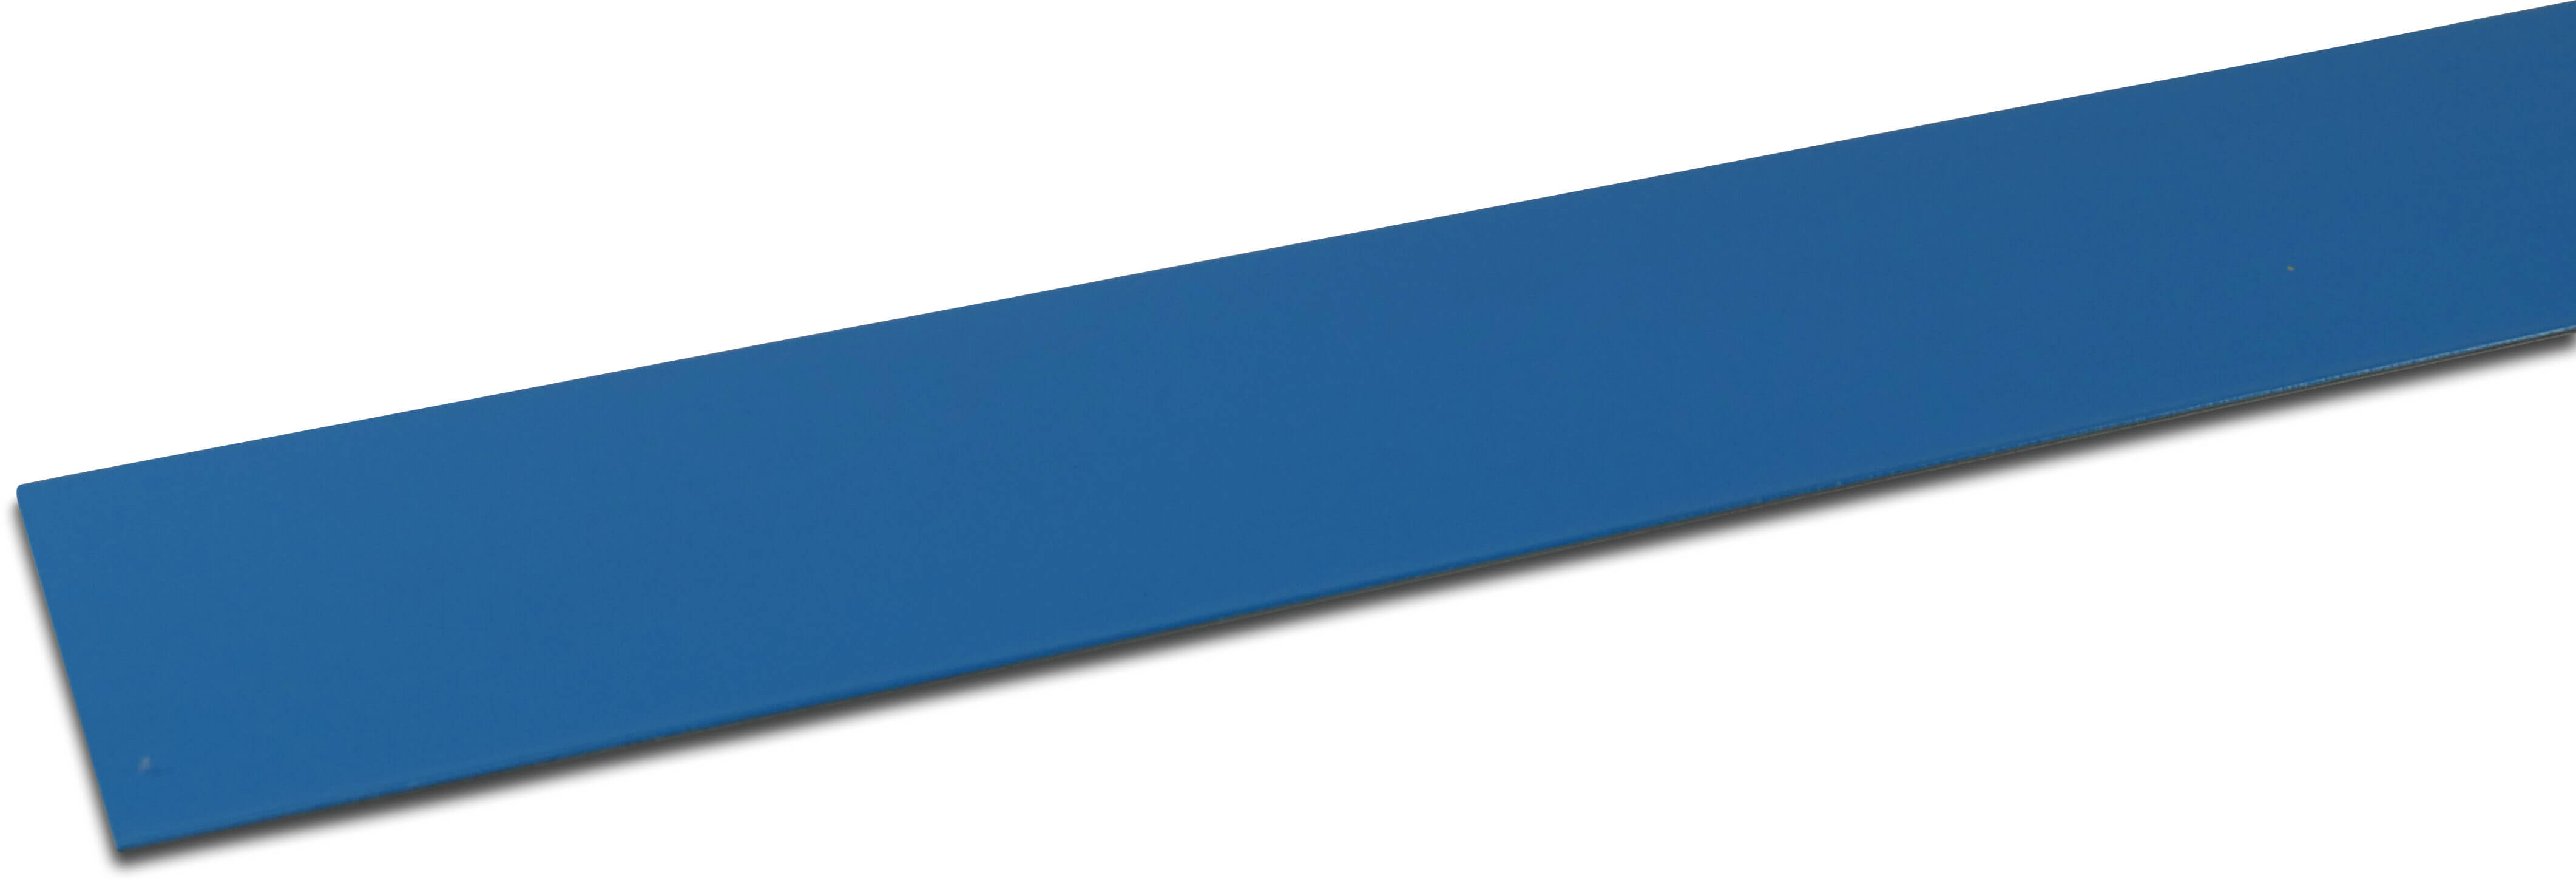 Elbe Profiel PVC gecoat metaal 70 mm x 30 mm x 2000 mm blauw 2m type Interior angle